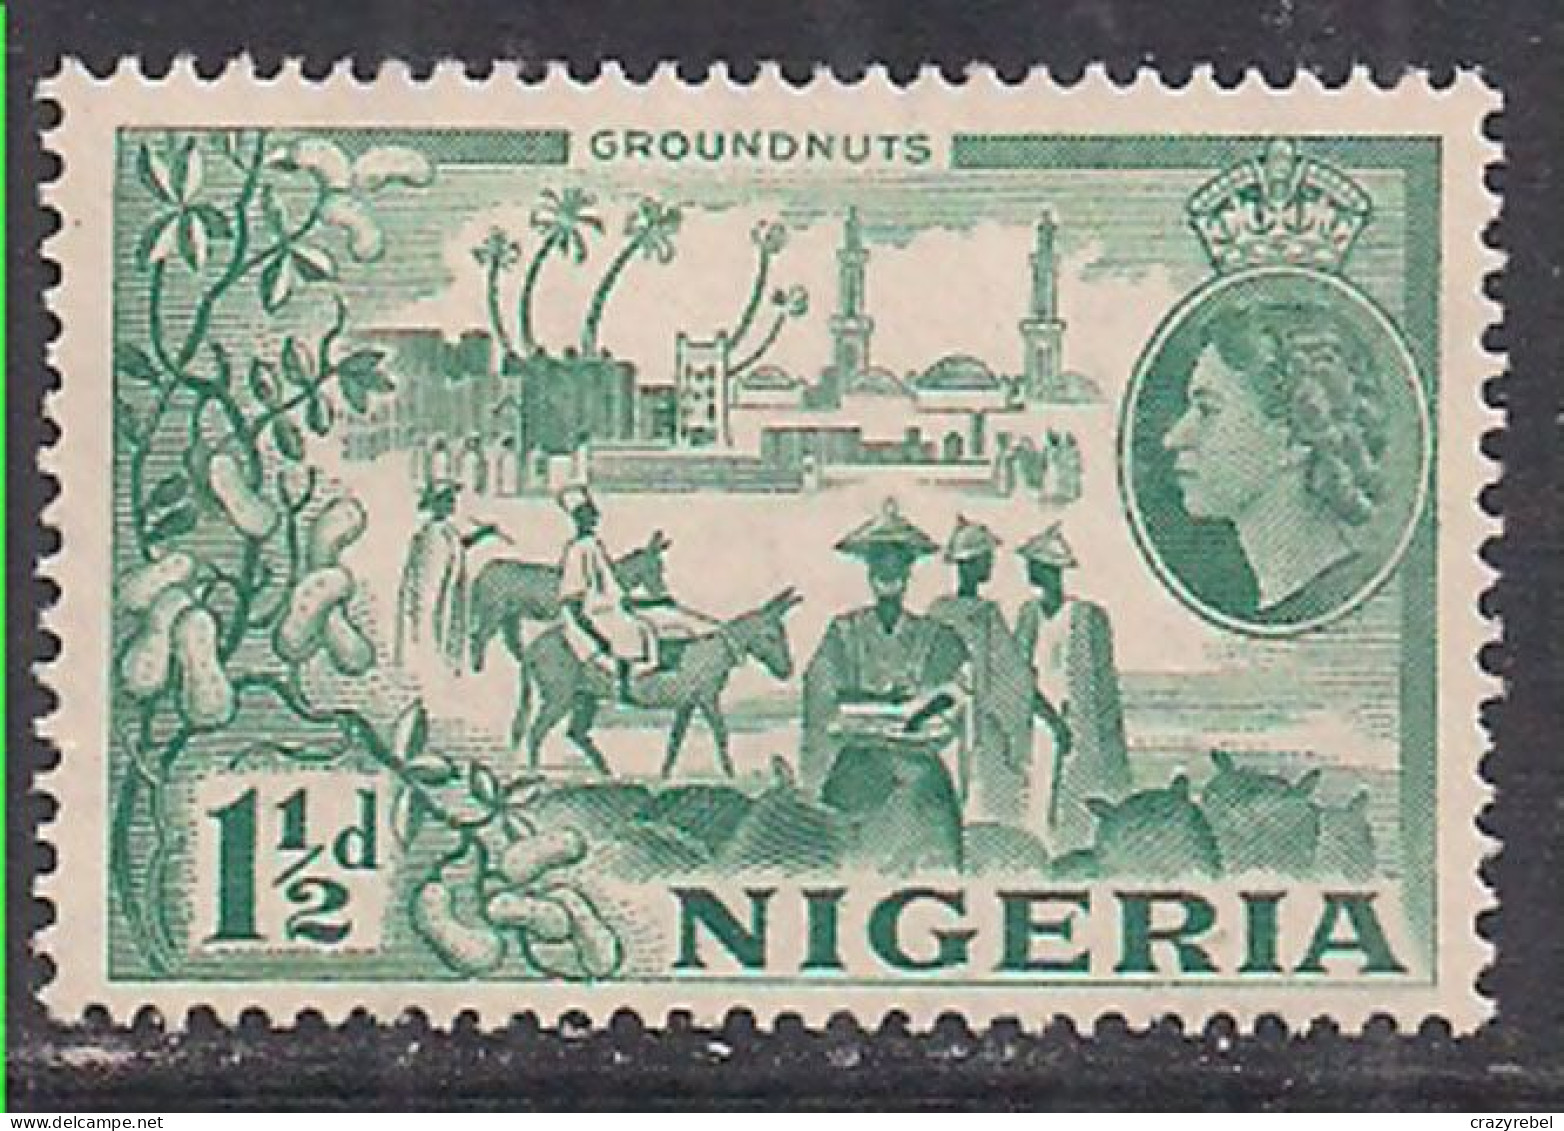 Nigeria 1953 - 58 QE2 1  1/2d Groundnuts Pictorial  MM SG 71 (E737 ) - Nigeria (...-1960)